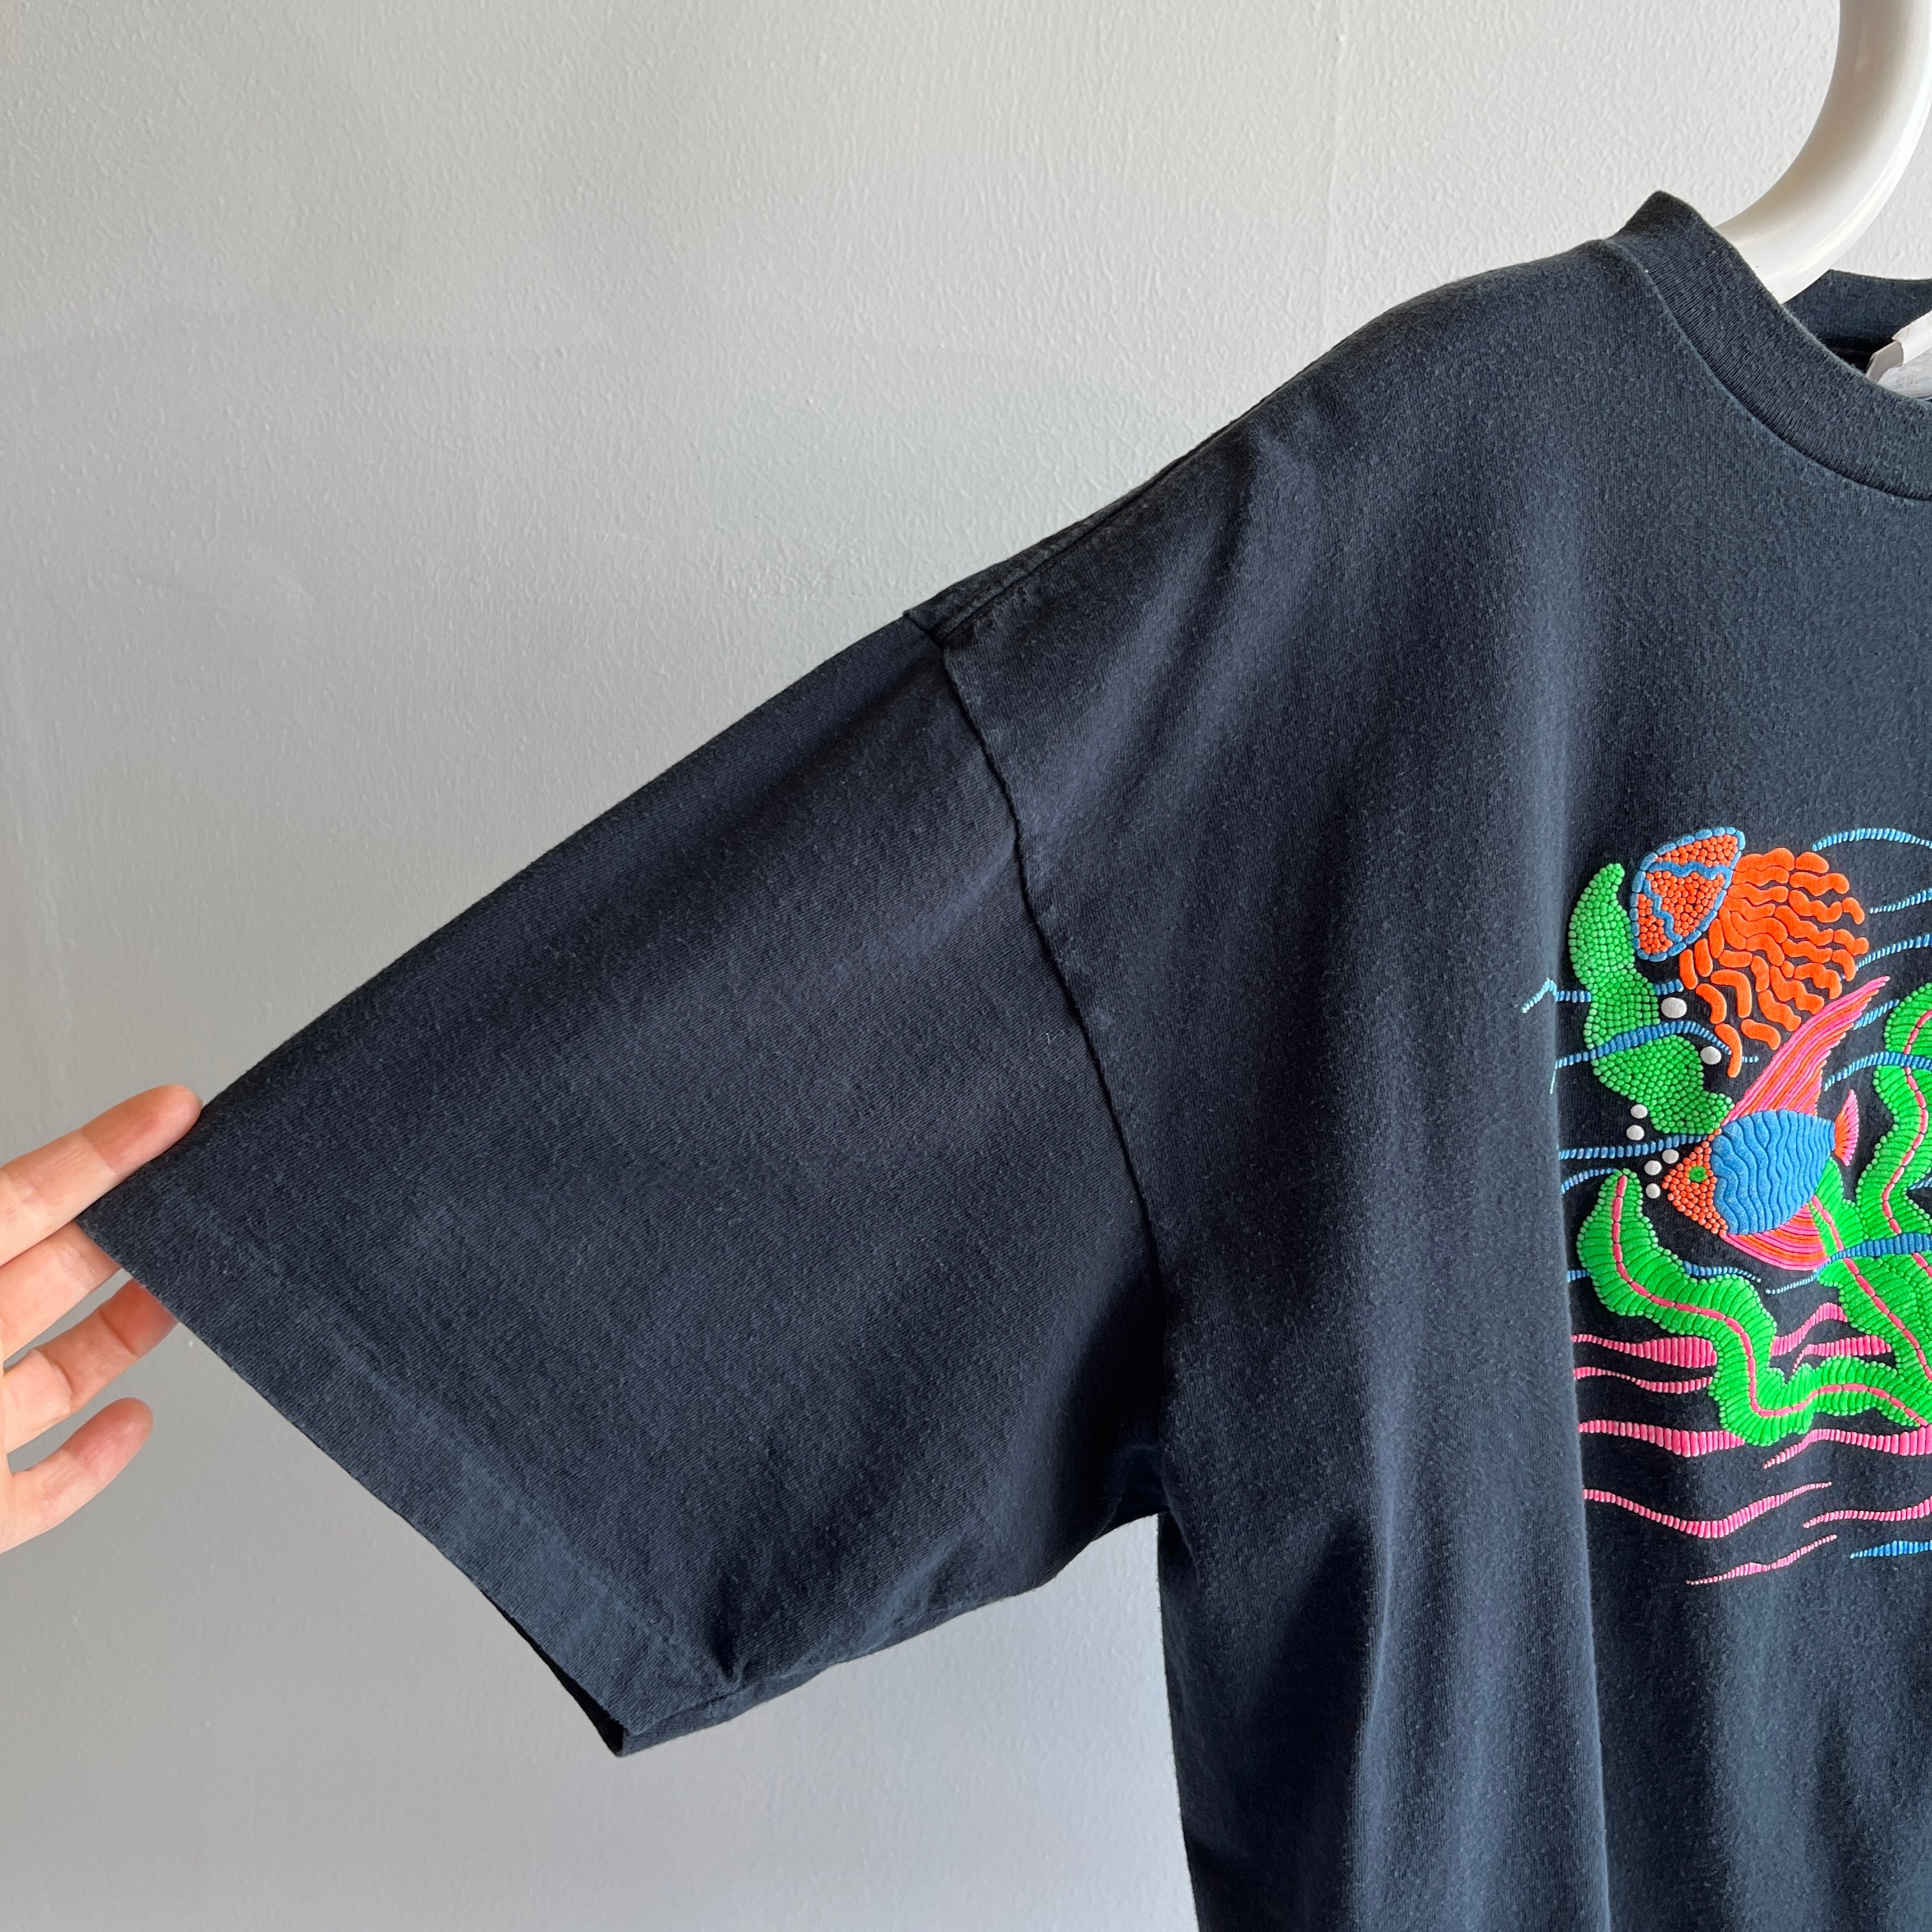 1980s Neon Fish Cotton T-Shirt